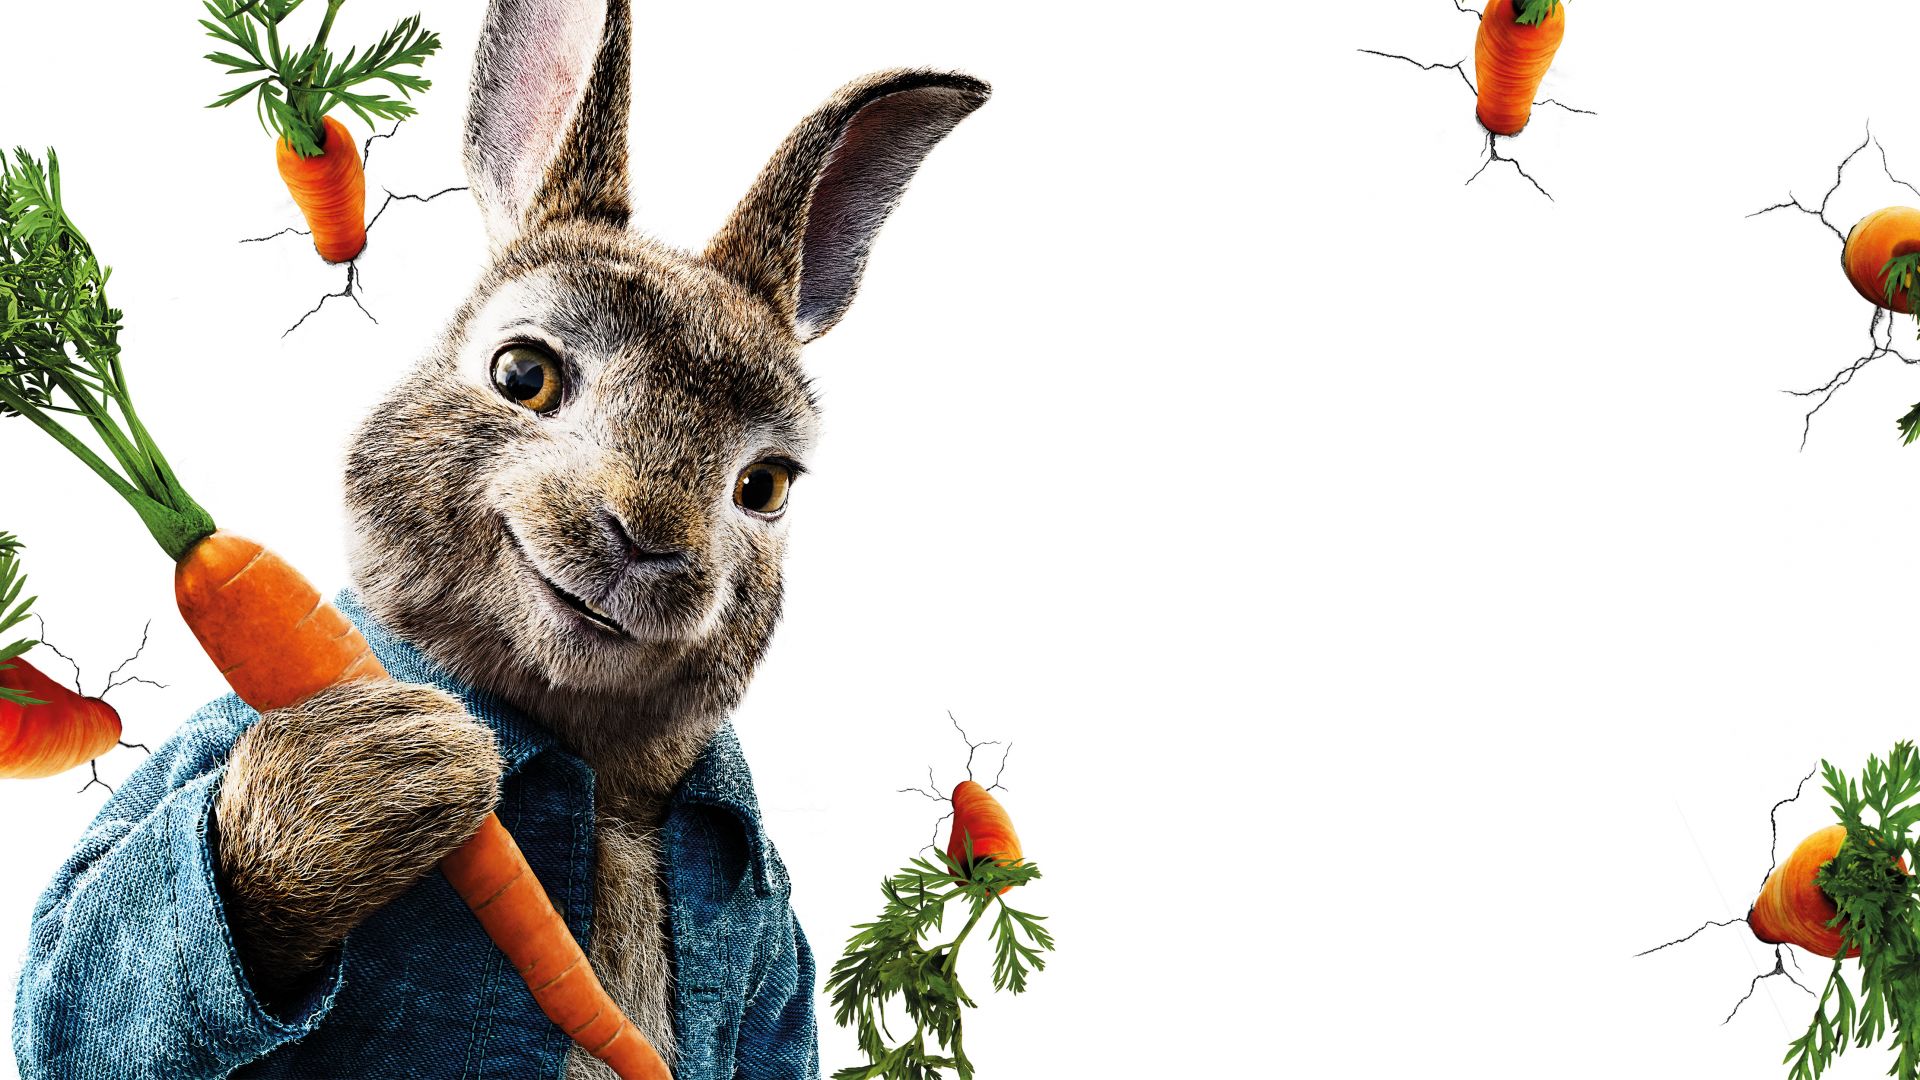 Кролик Питер, Peter Rabbit, 5k (horizontal)